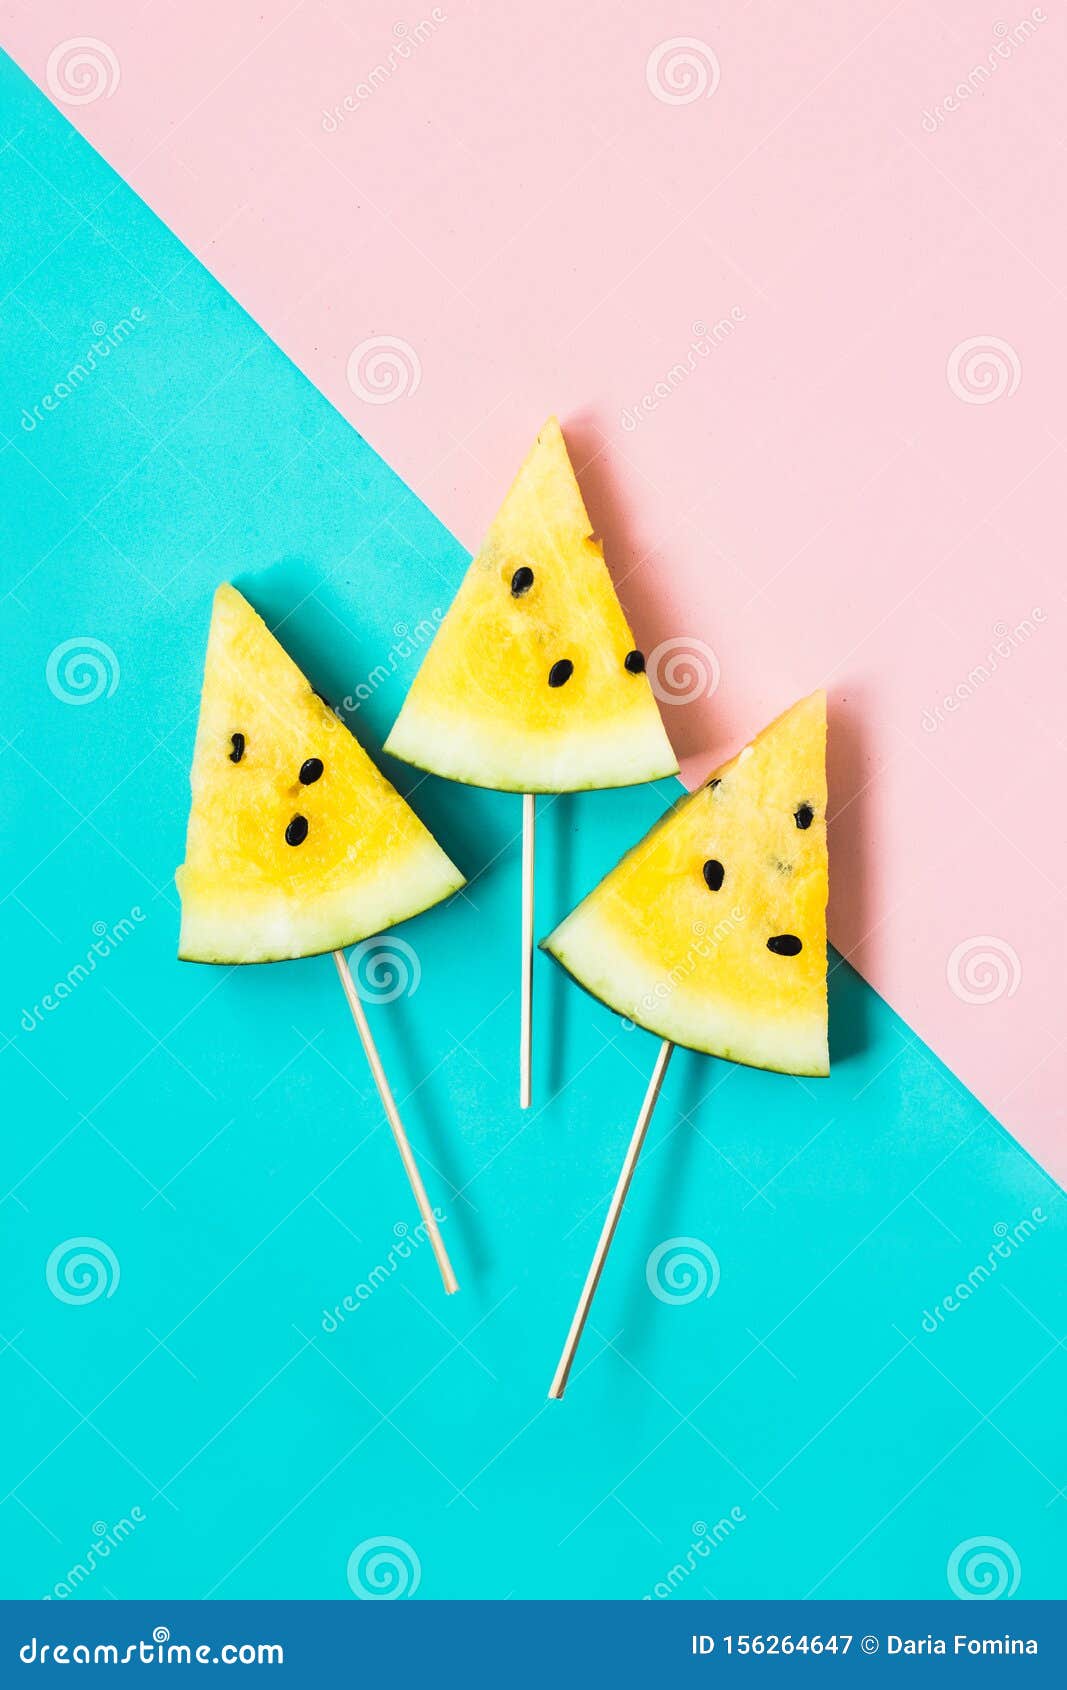 Three Triangular Ice Cream Slices on a Stick of Ripe Yellow Watermelon ...